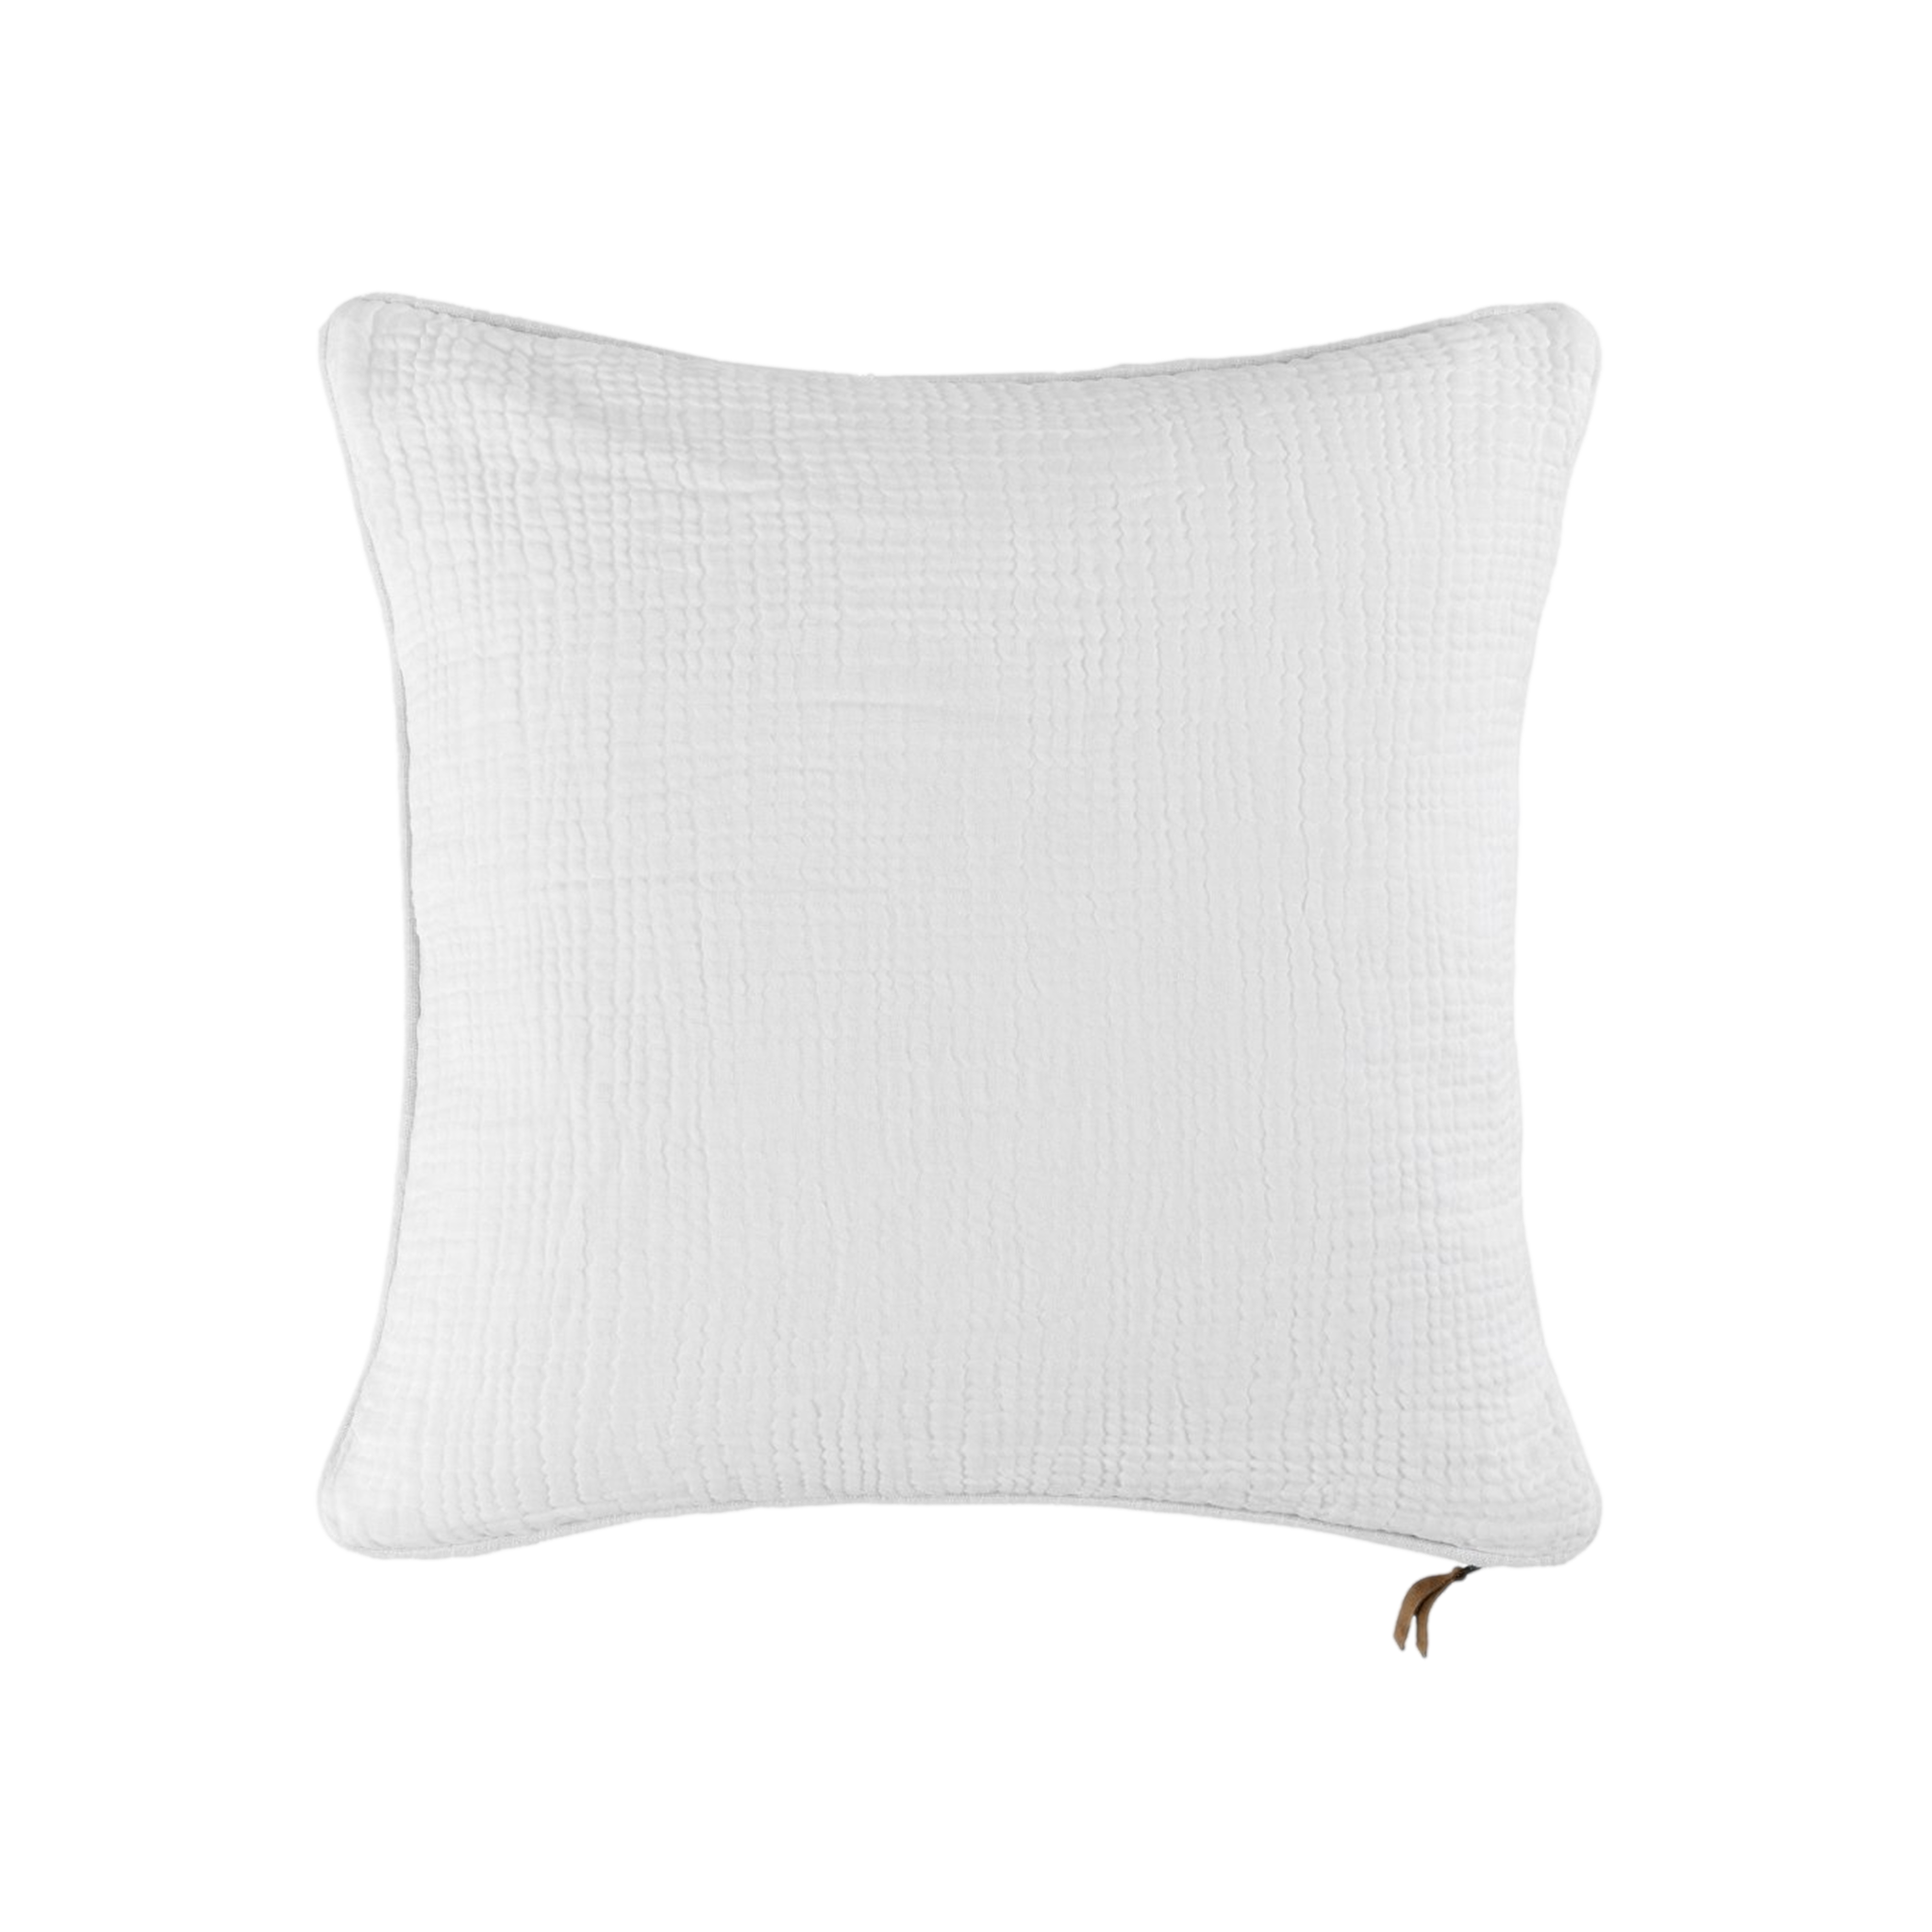 Seaglass Grove Pillow Bundle